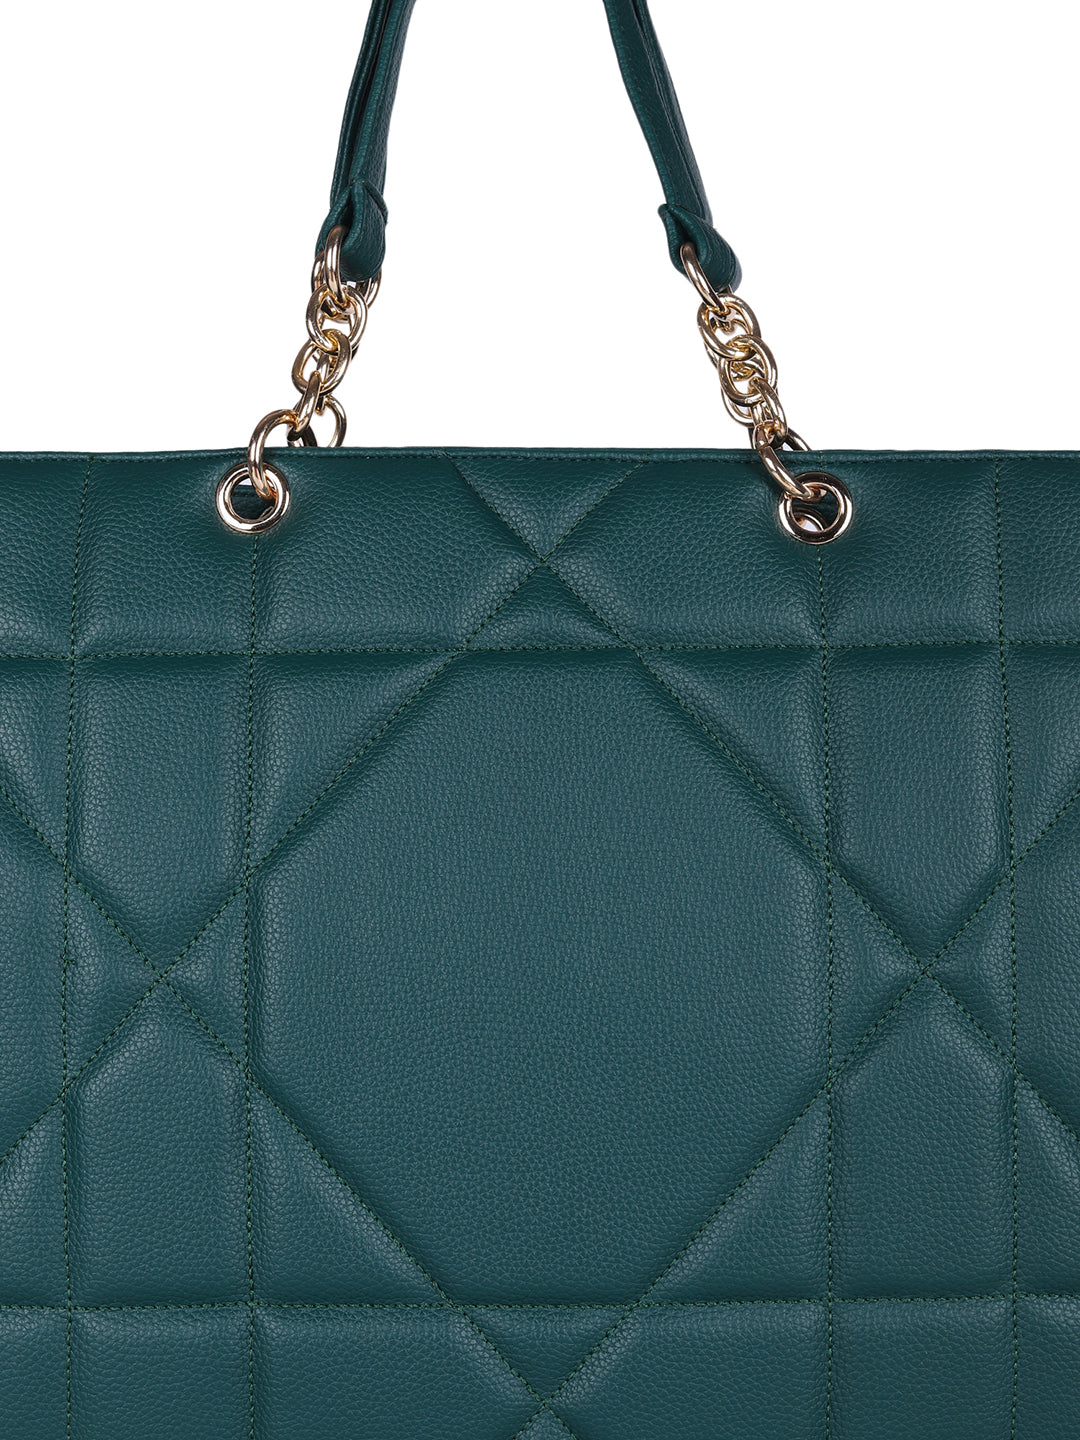 DENVER BAGS MINI WESST Green Textured Tote Bag(MWTB104GR)